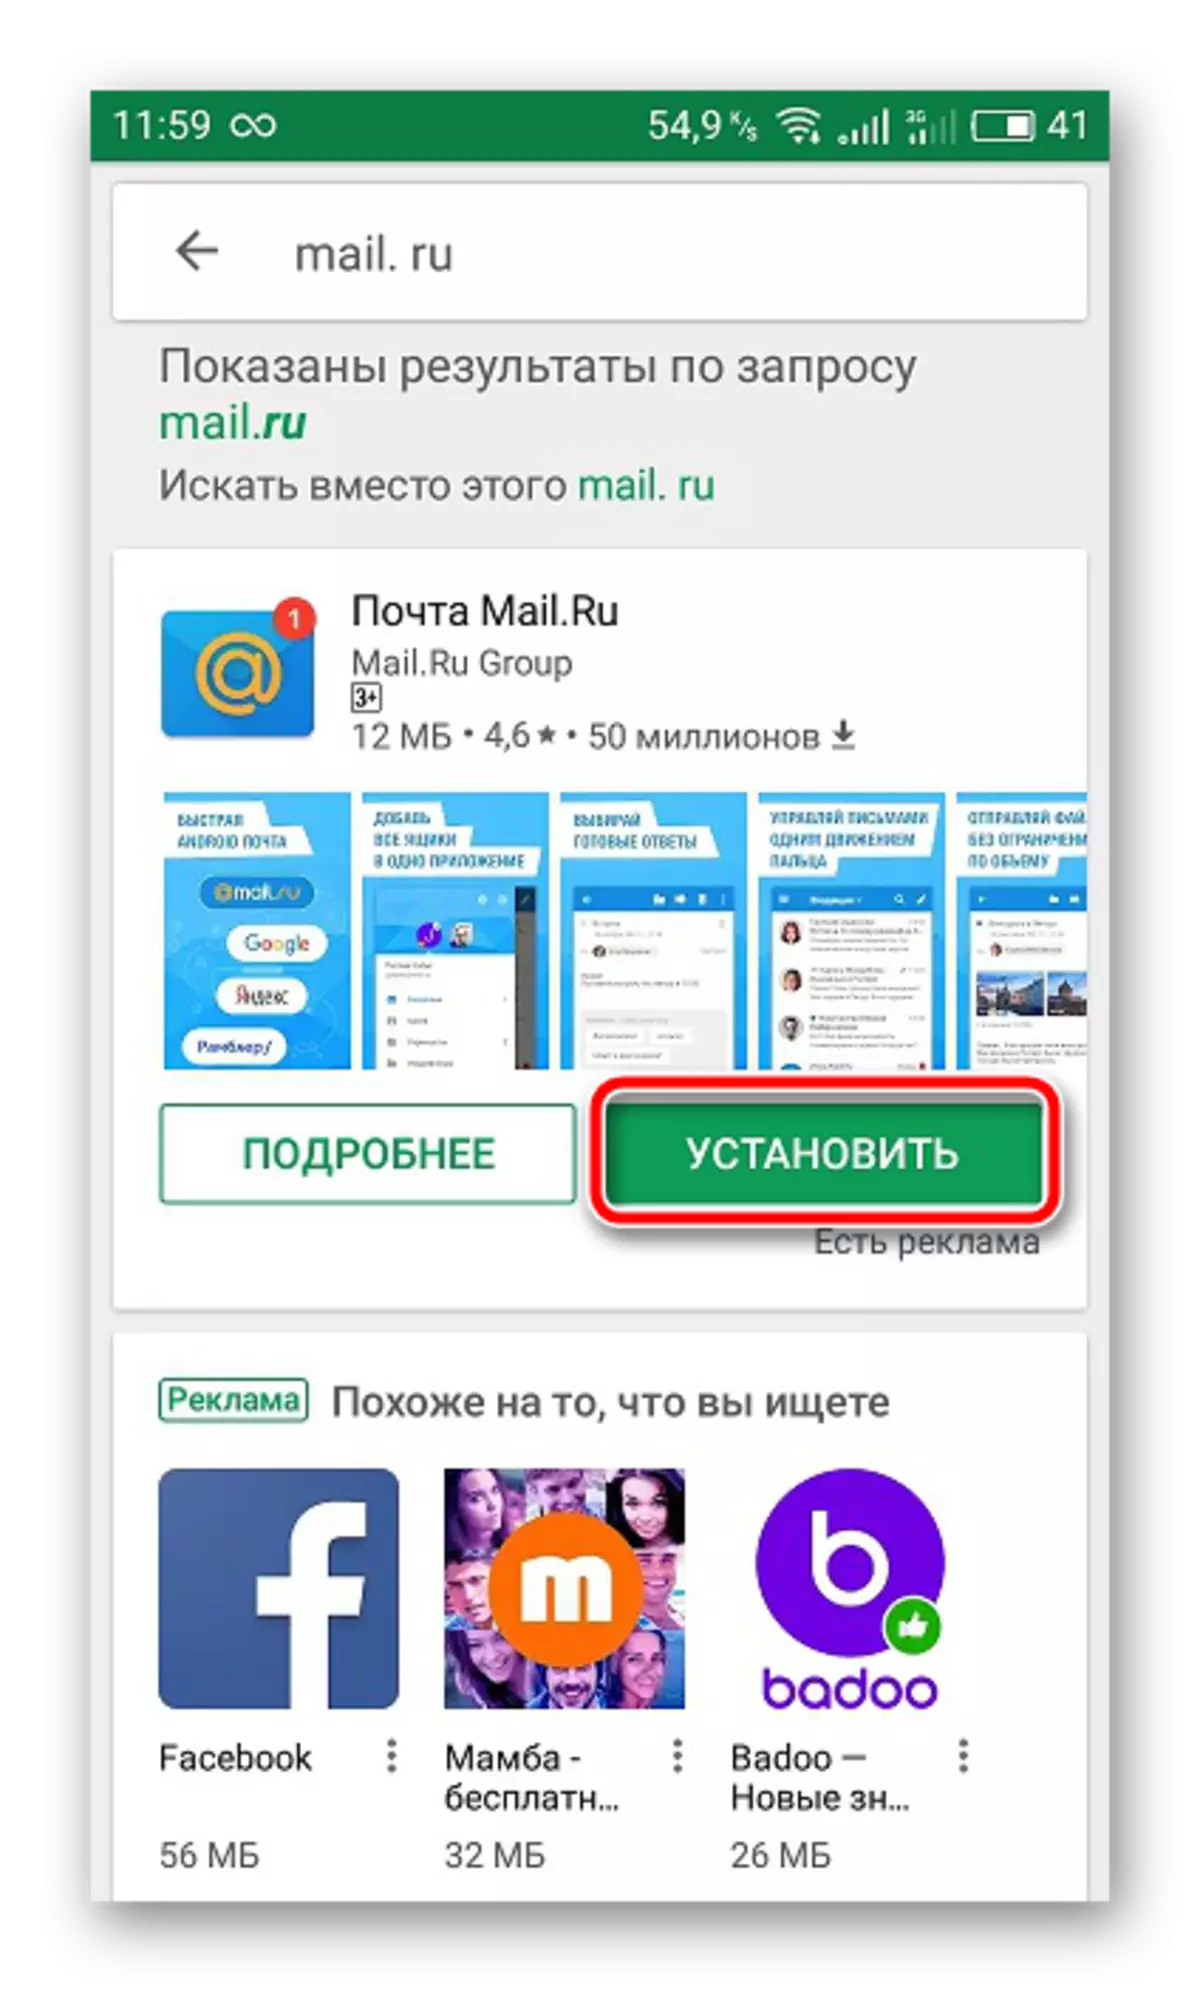 Mail Client Clace Mail.ru татаж авах